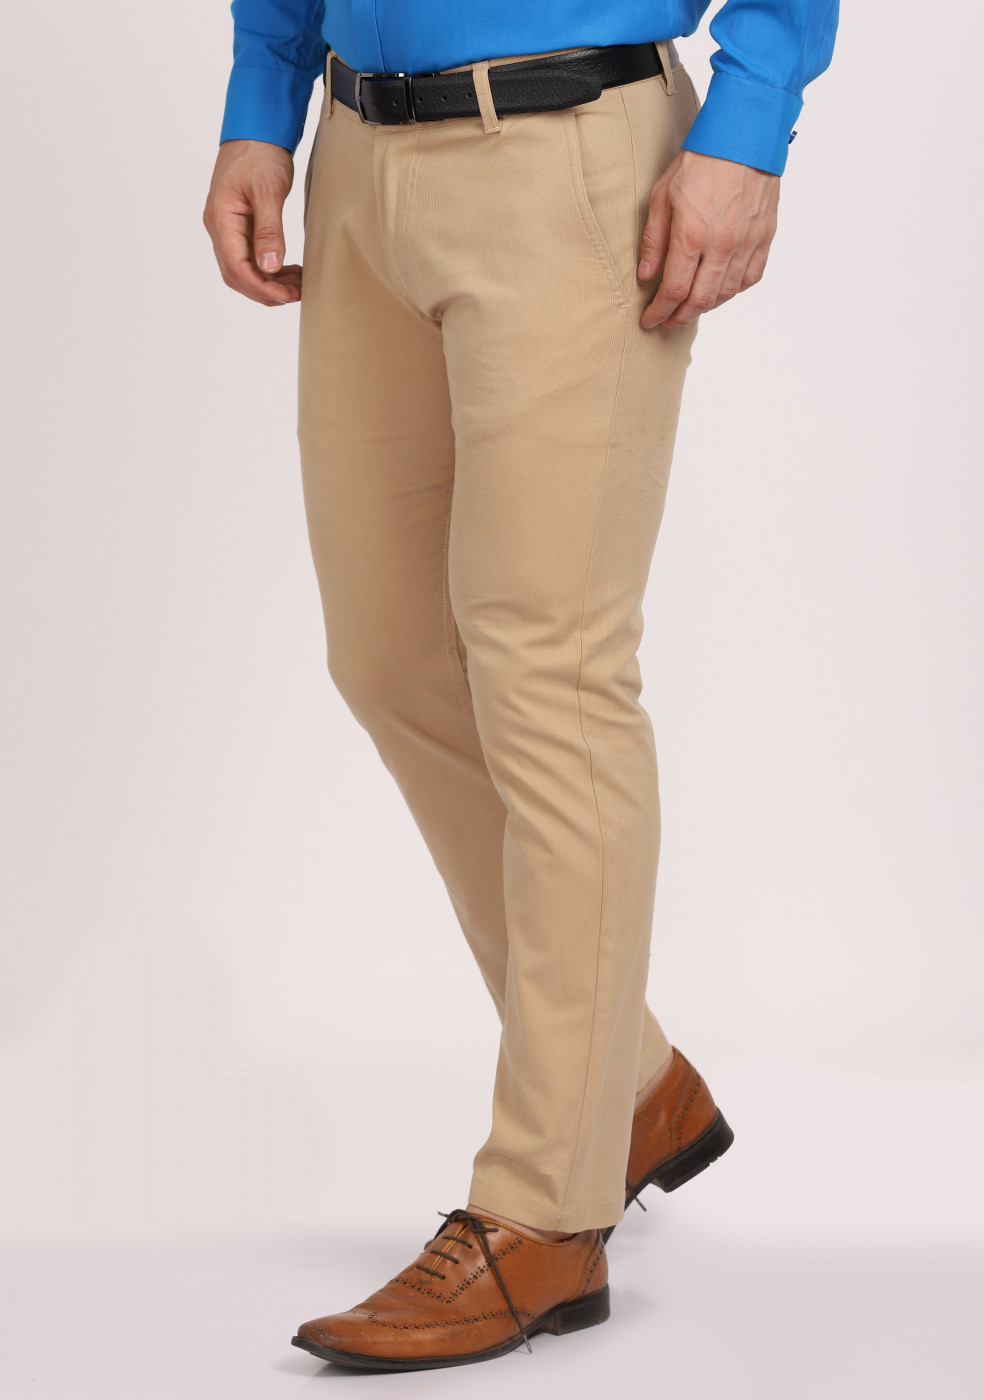 ASHTOM Fawn Color Formal Cotton Trouser Regular Fit For Men